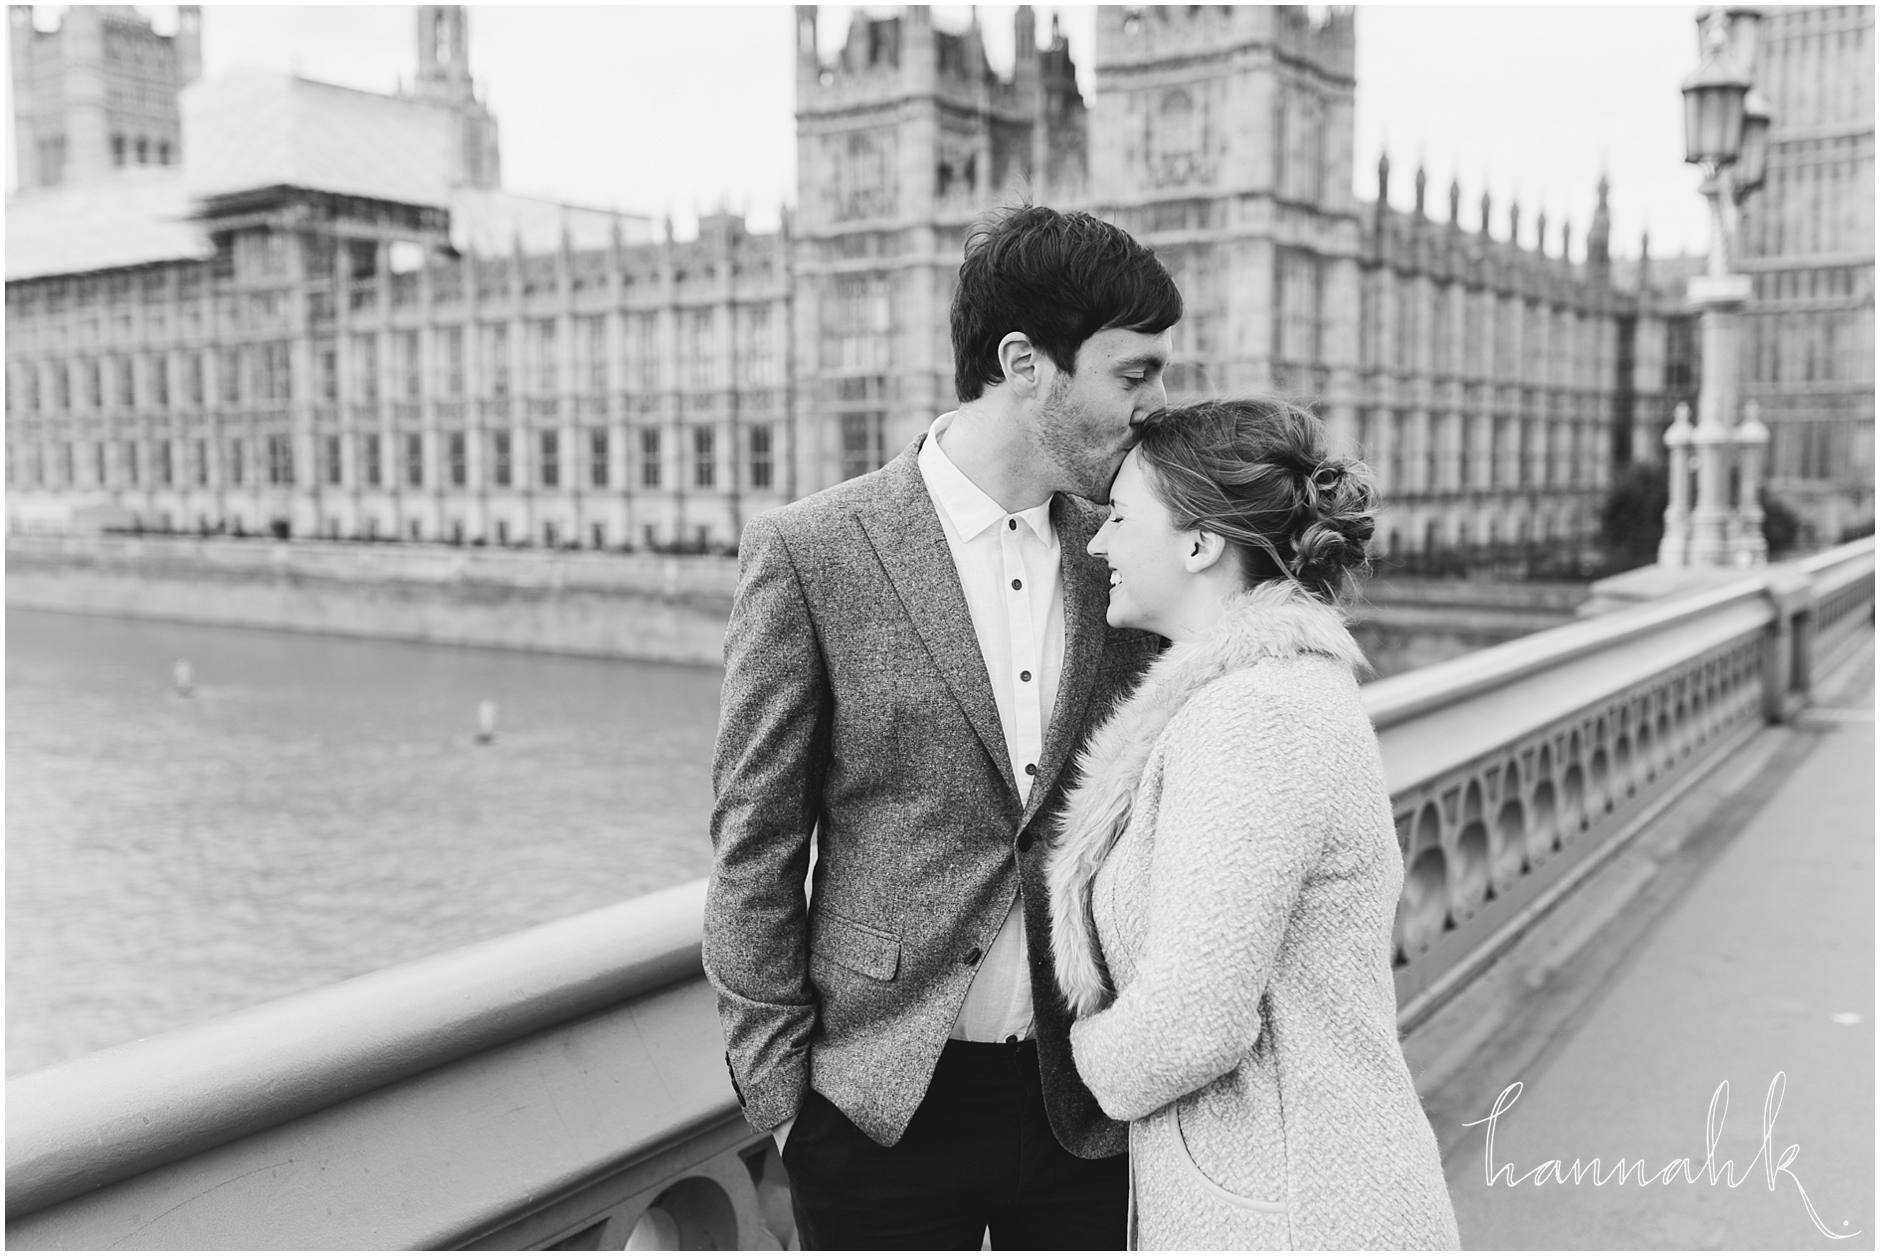 hannah-k-photography-london-engagement-photography-destination-wedding-photographer-10